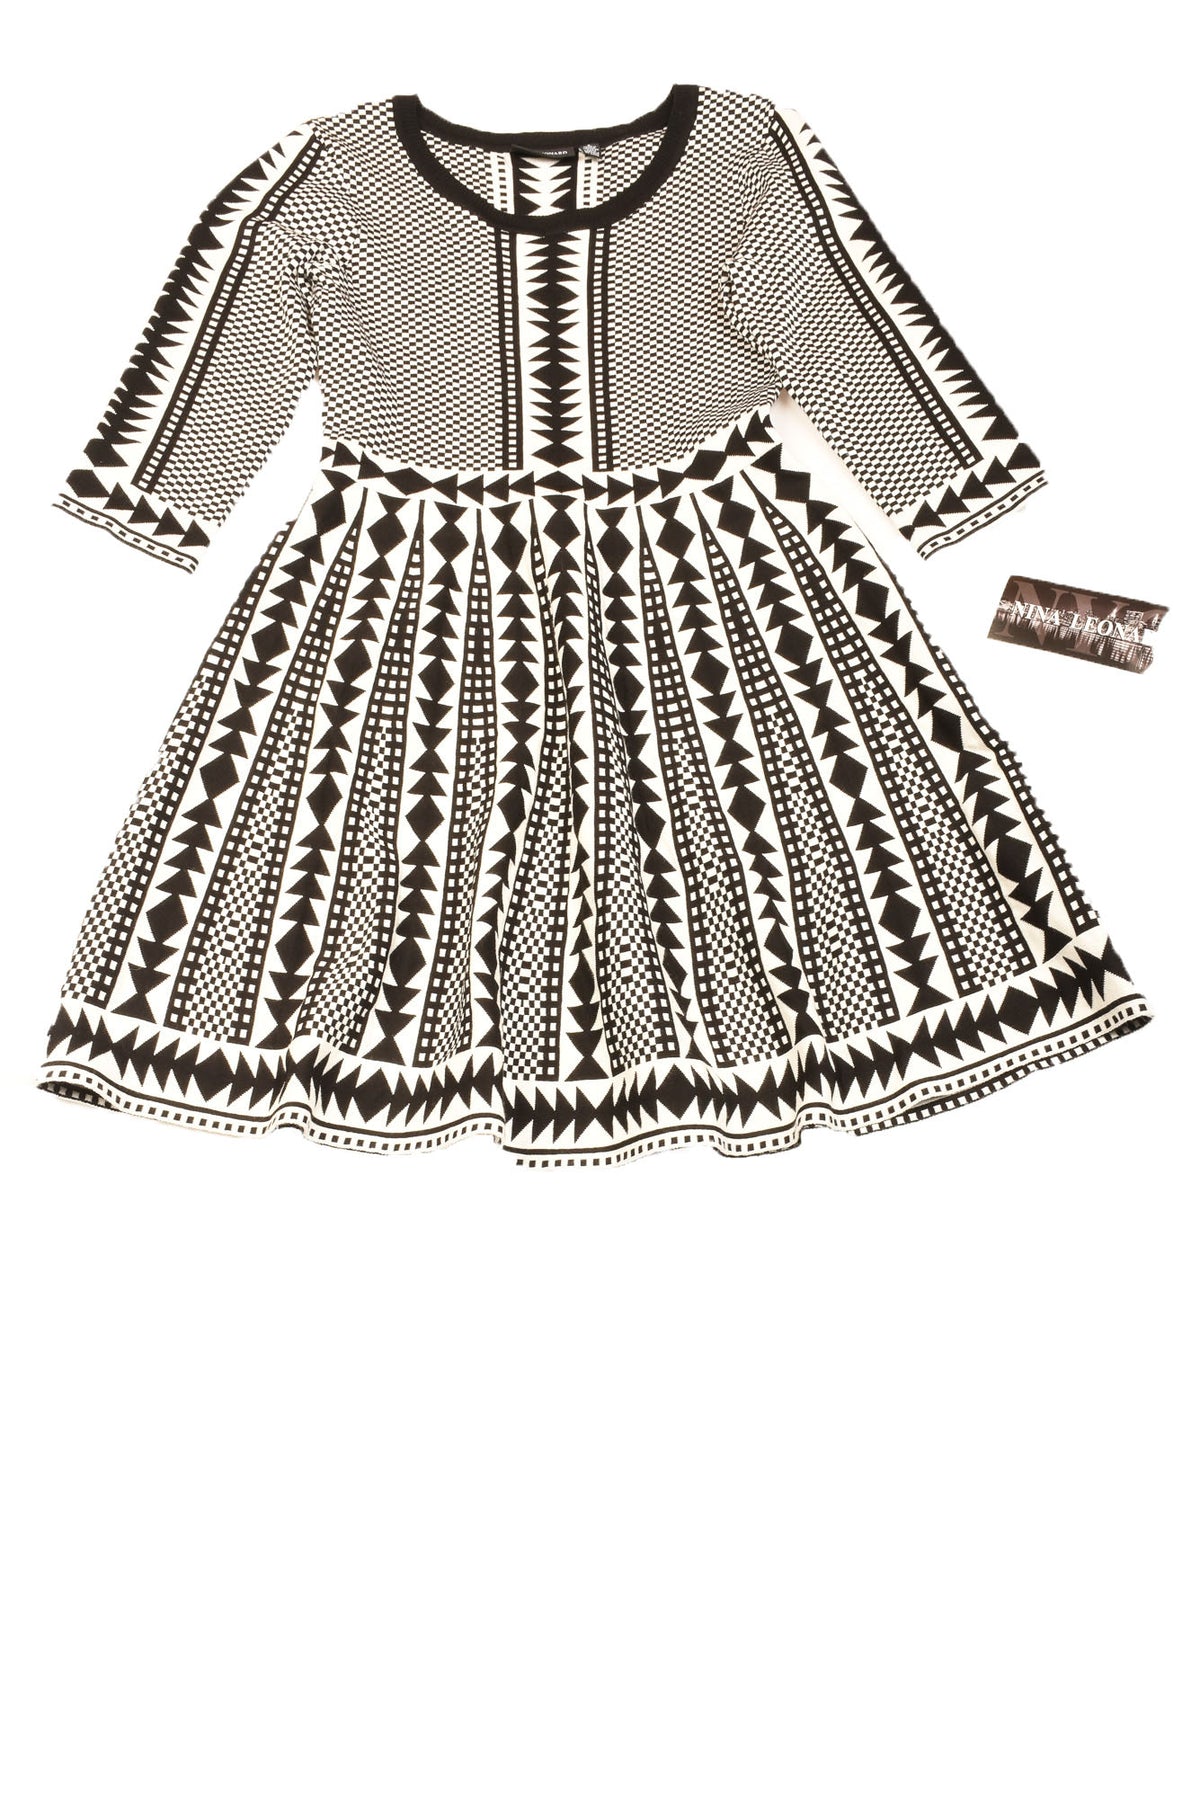 Nina Leonard Size Small Women's Dress - Your Designer Thrift